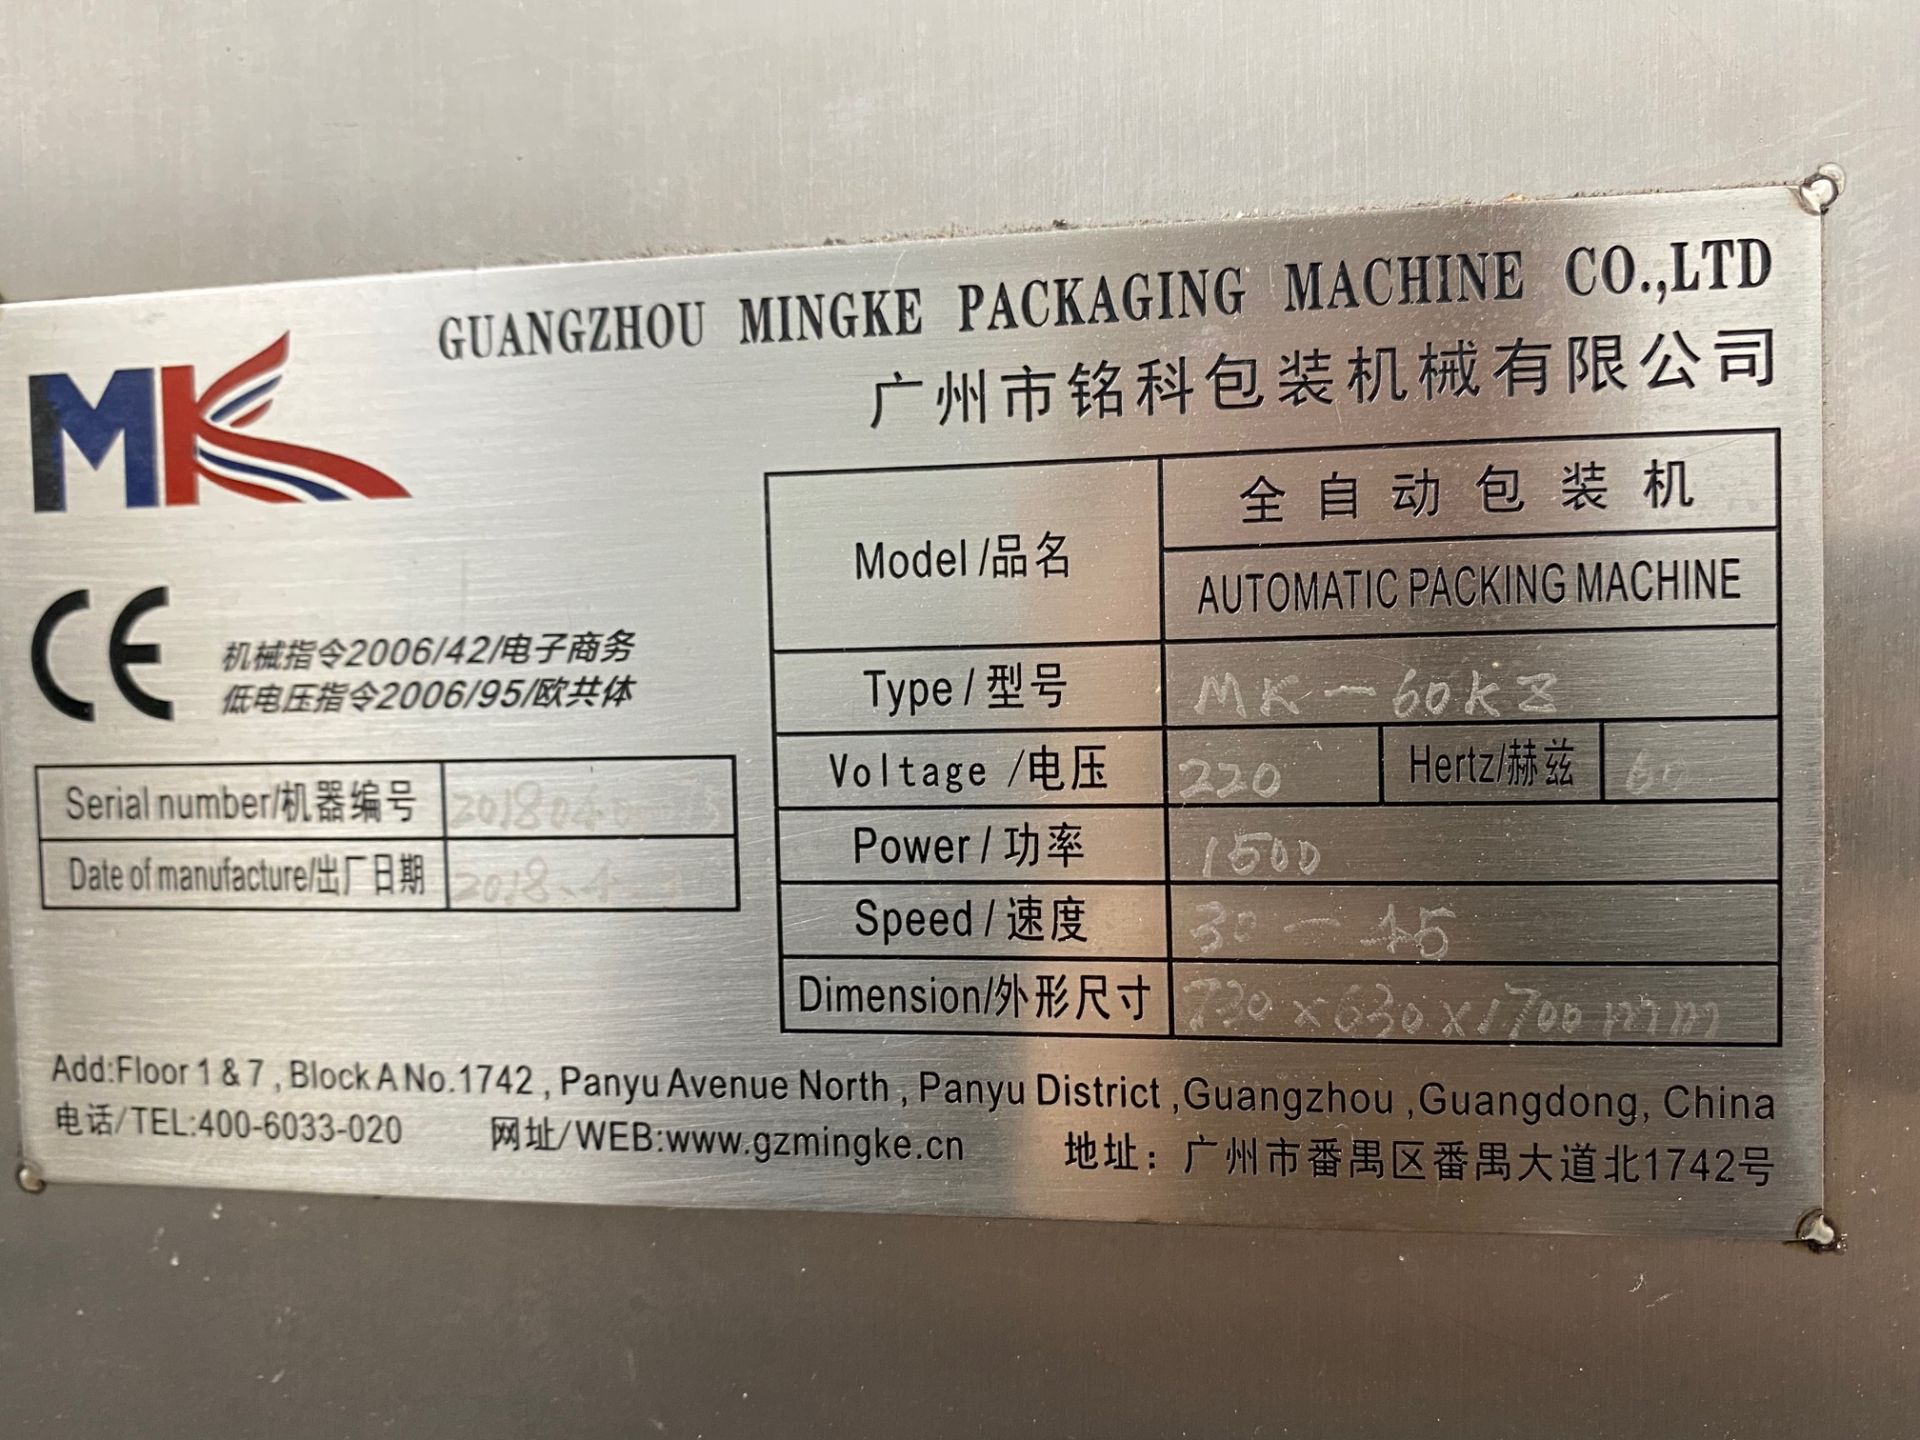 Used Guangzhou Mingke Packaging Machine Co Gummy Auto Packing Machine. Model MK-60KZ. - Image 2 of 8